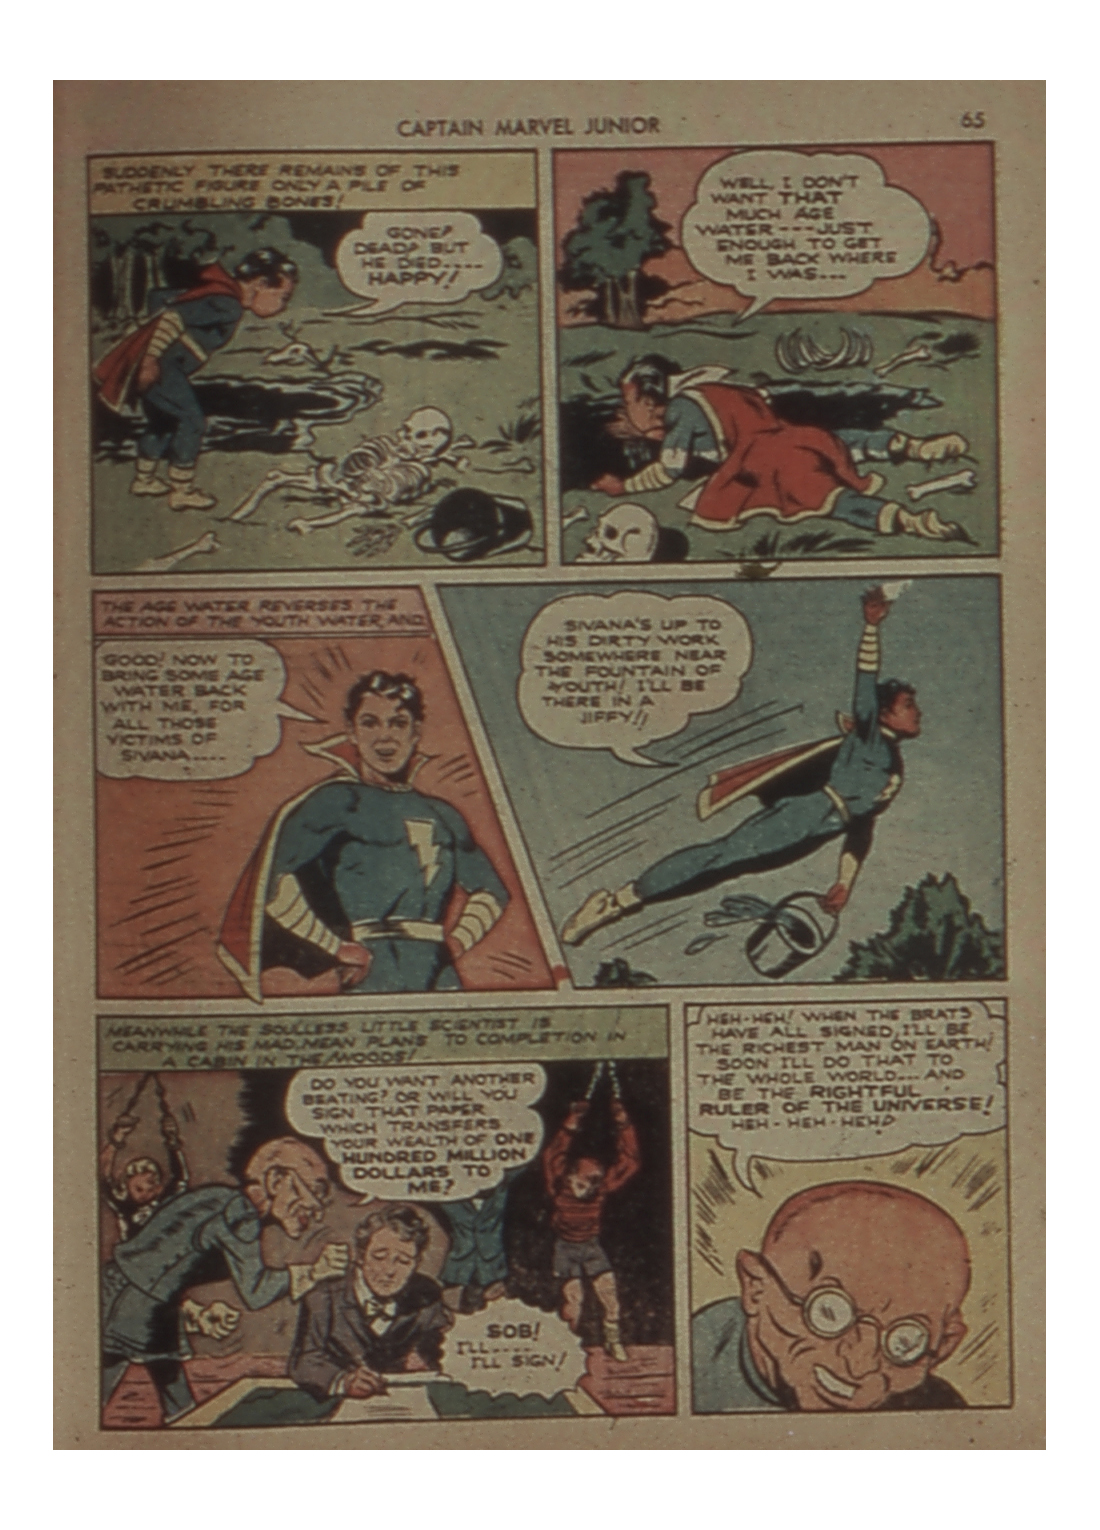 Read online Captain Marvel, Jr. comic -  Issue #5 - 65